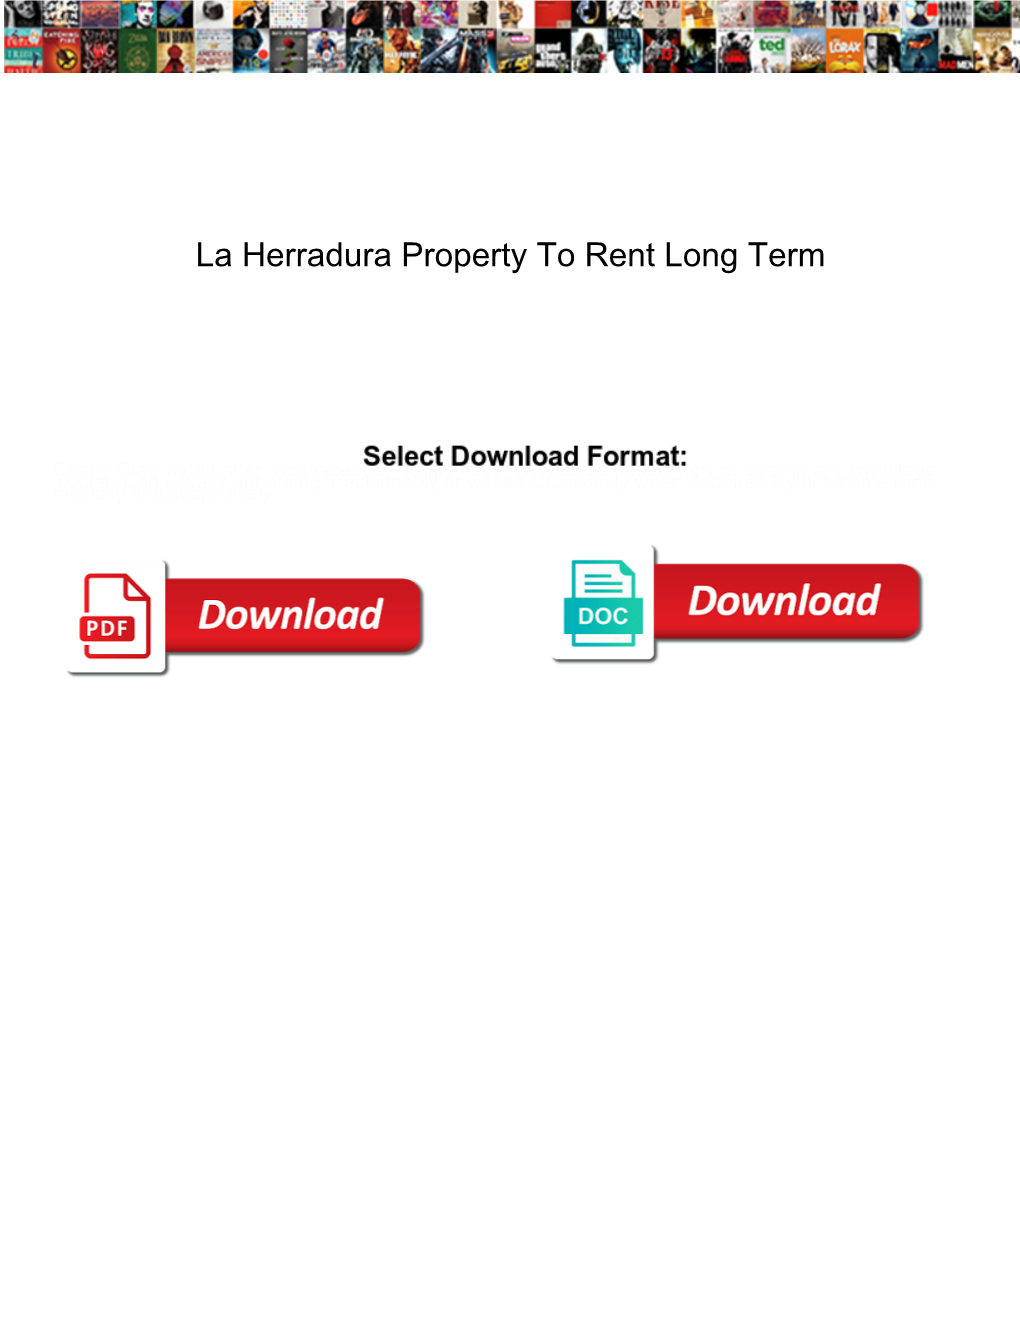 La Herradura Property to Rent Long Term